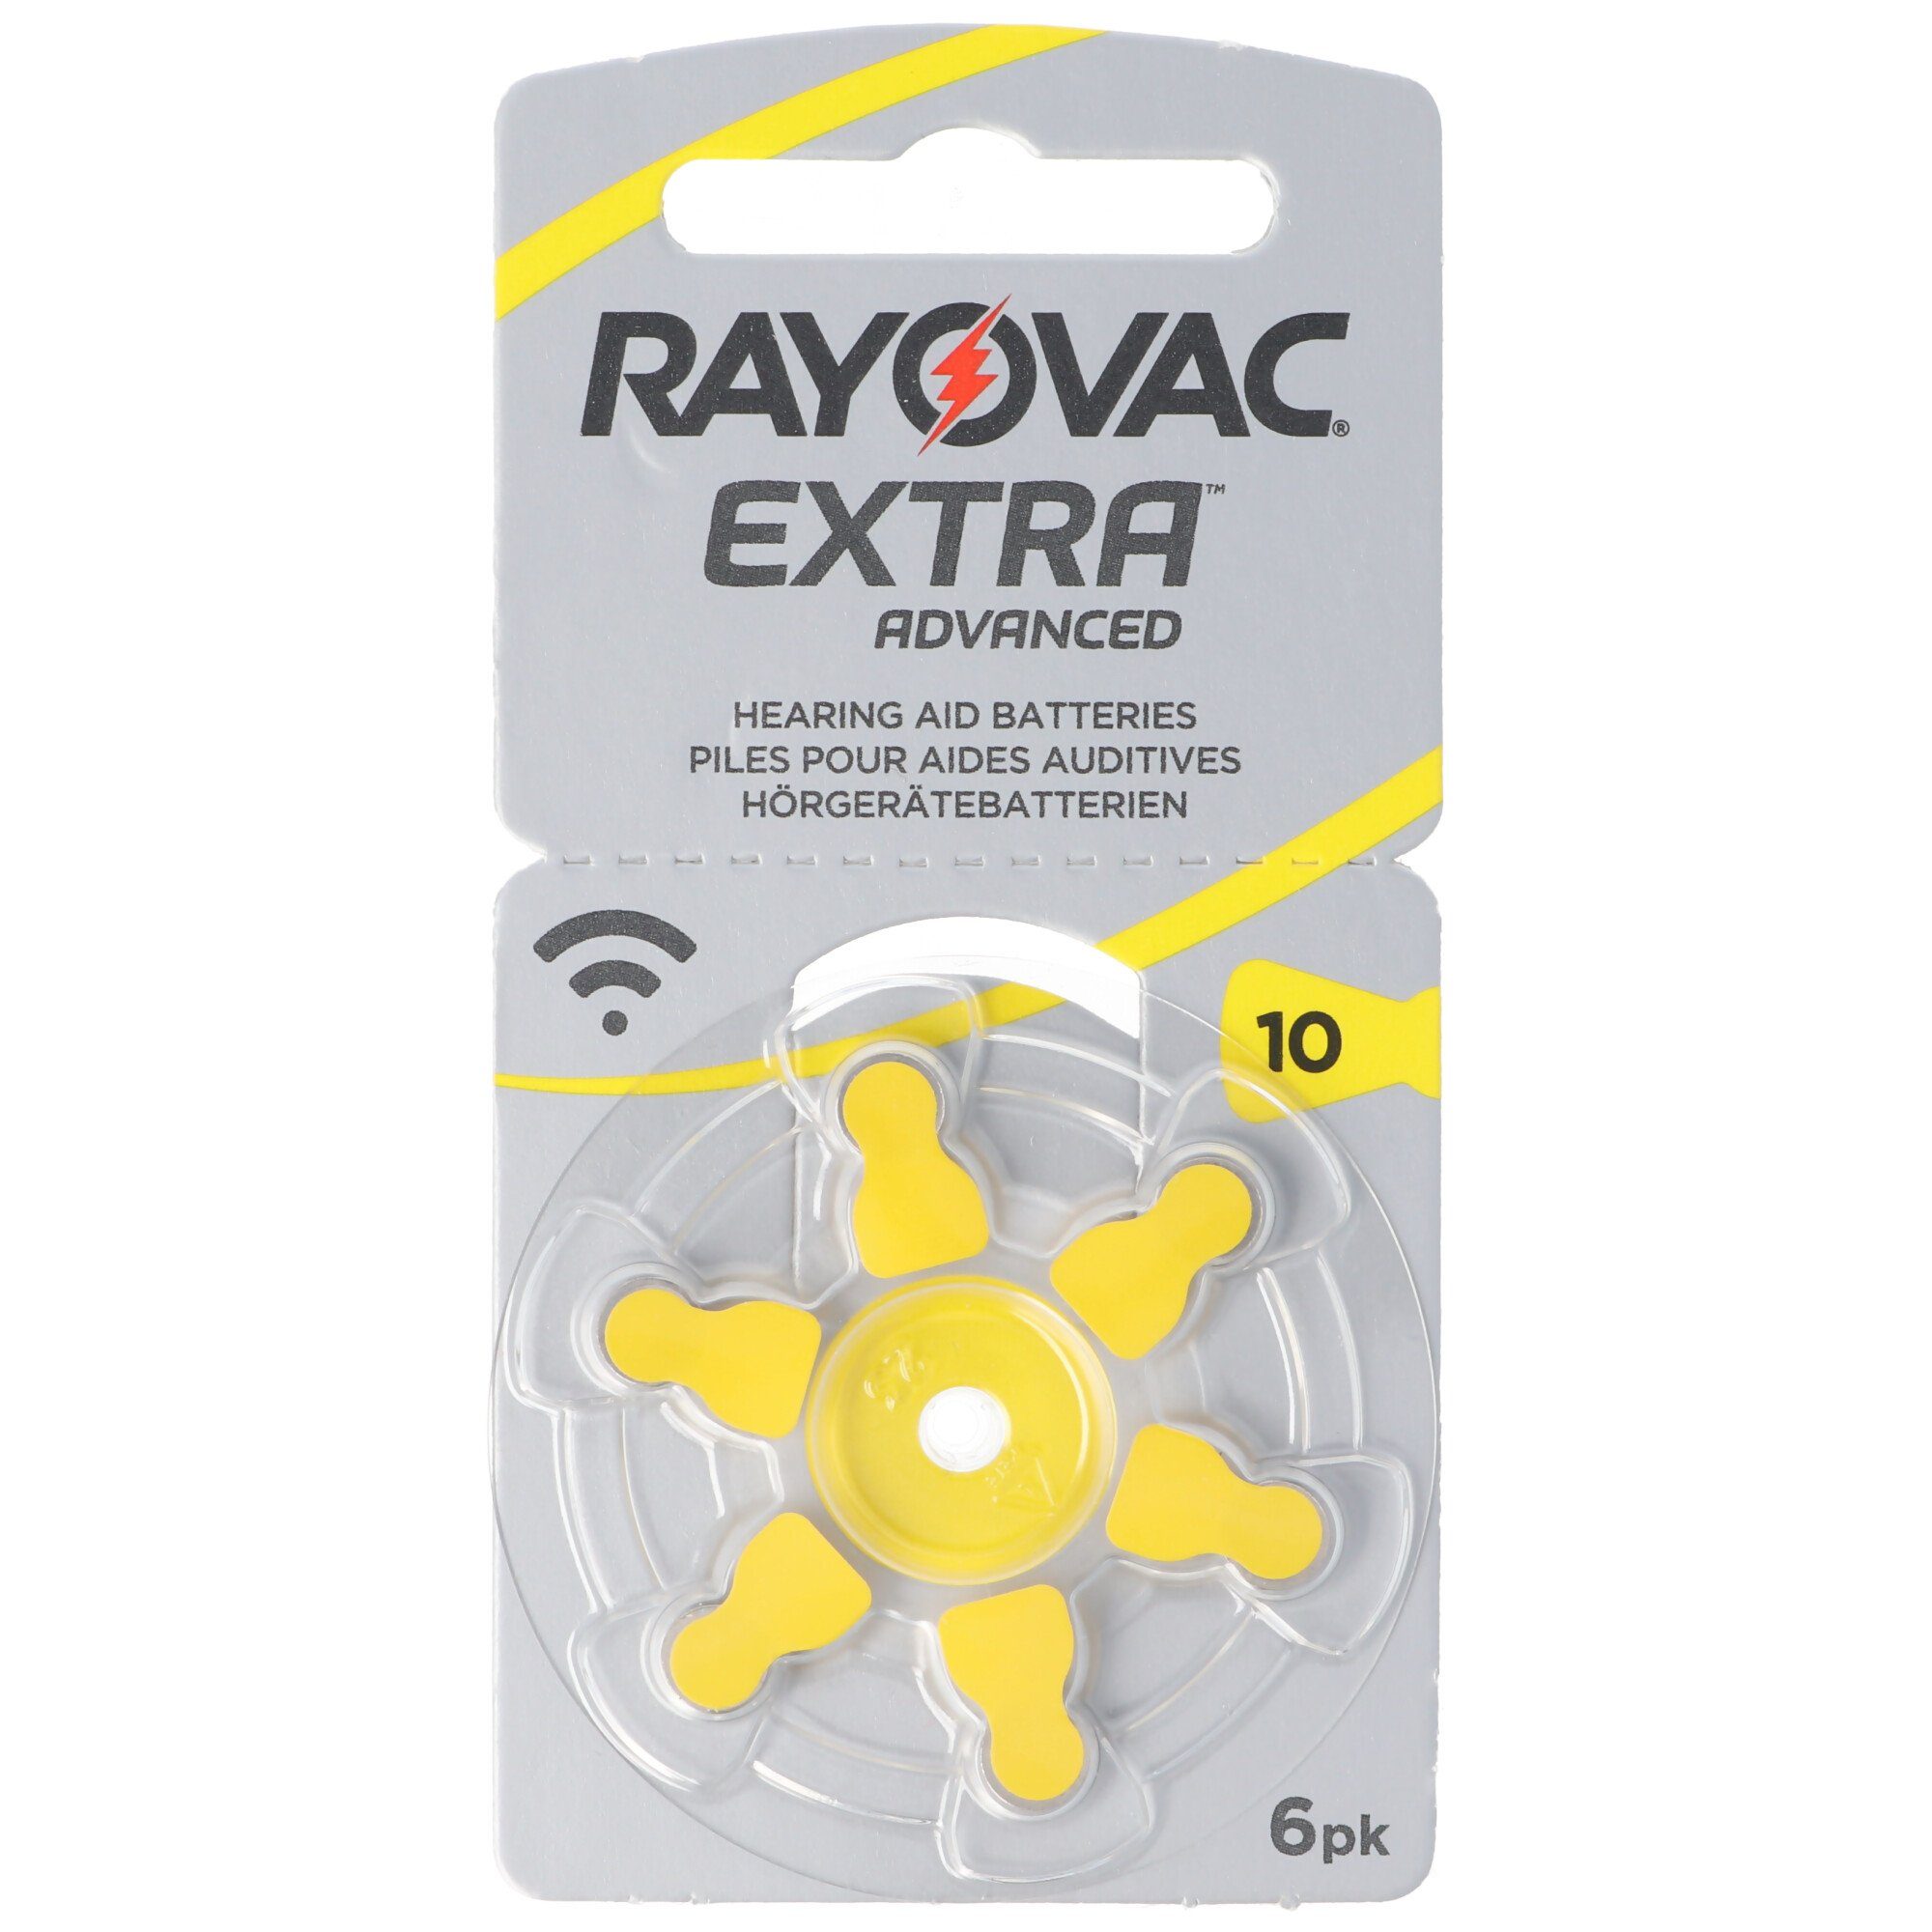 RAYOVAC Rayovac Hörgerätebatterie H10MF Nr. (1,4 10 Advanced, 105mAh Batterie, 6 V) PR70 Extra